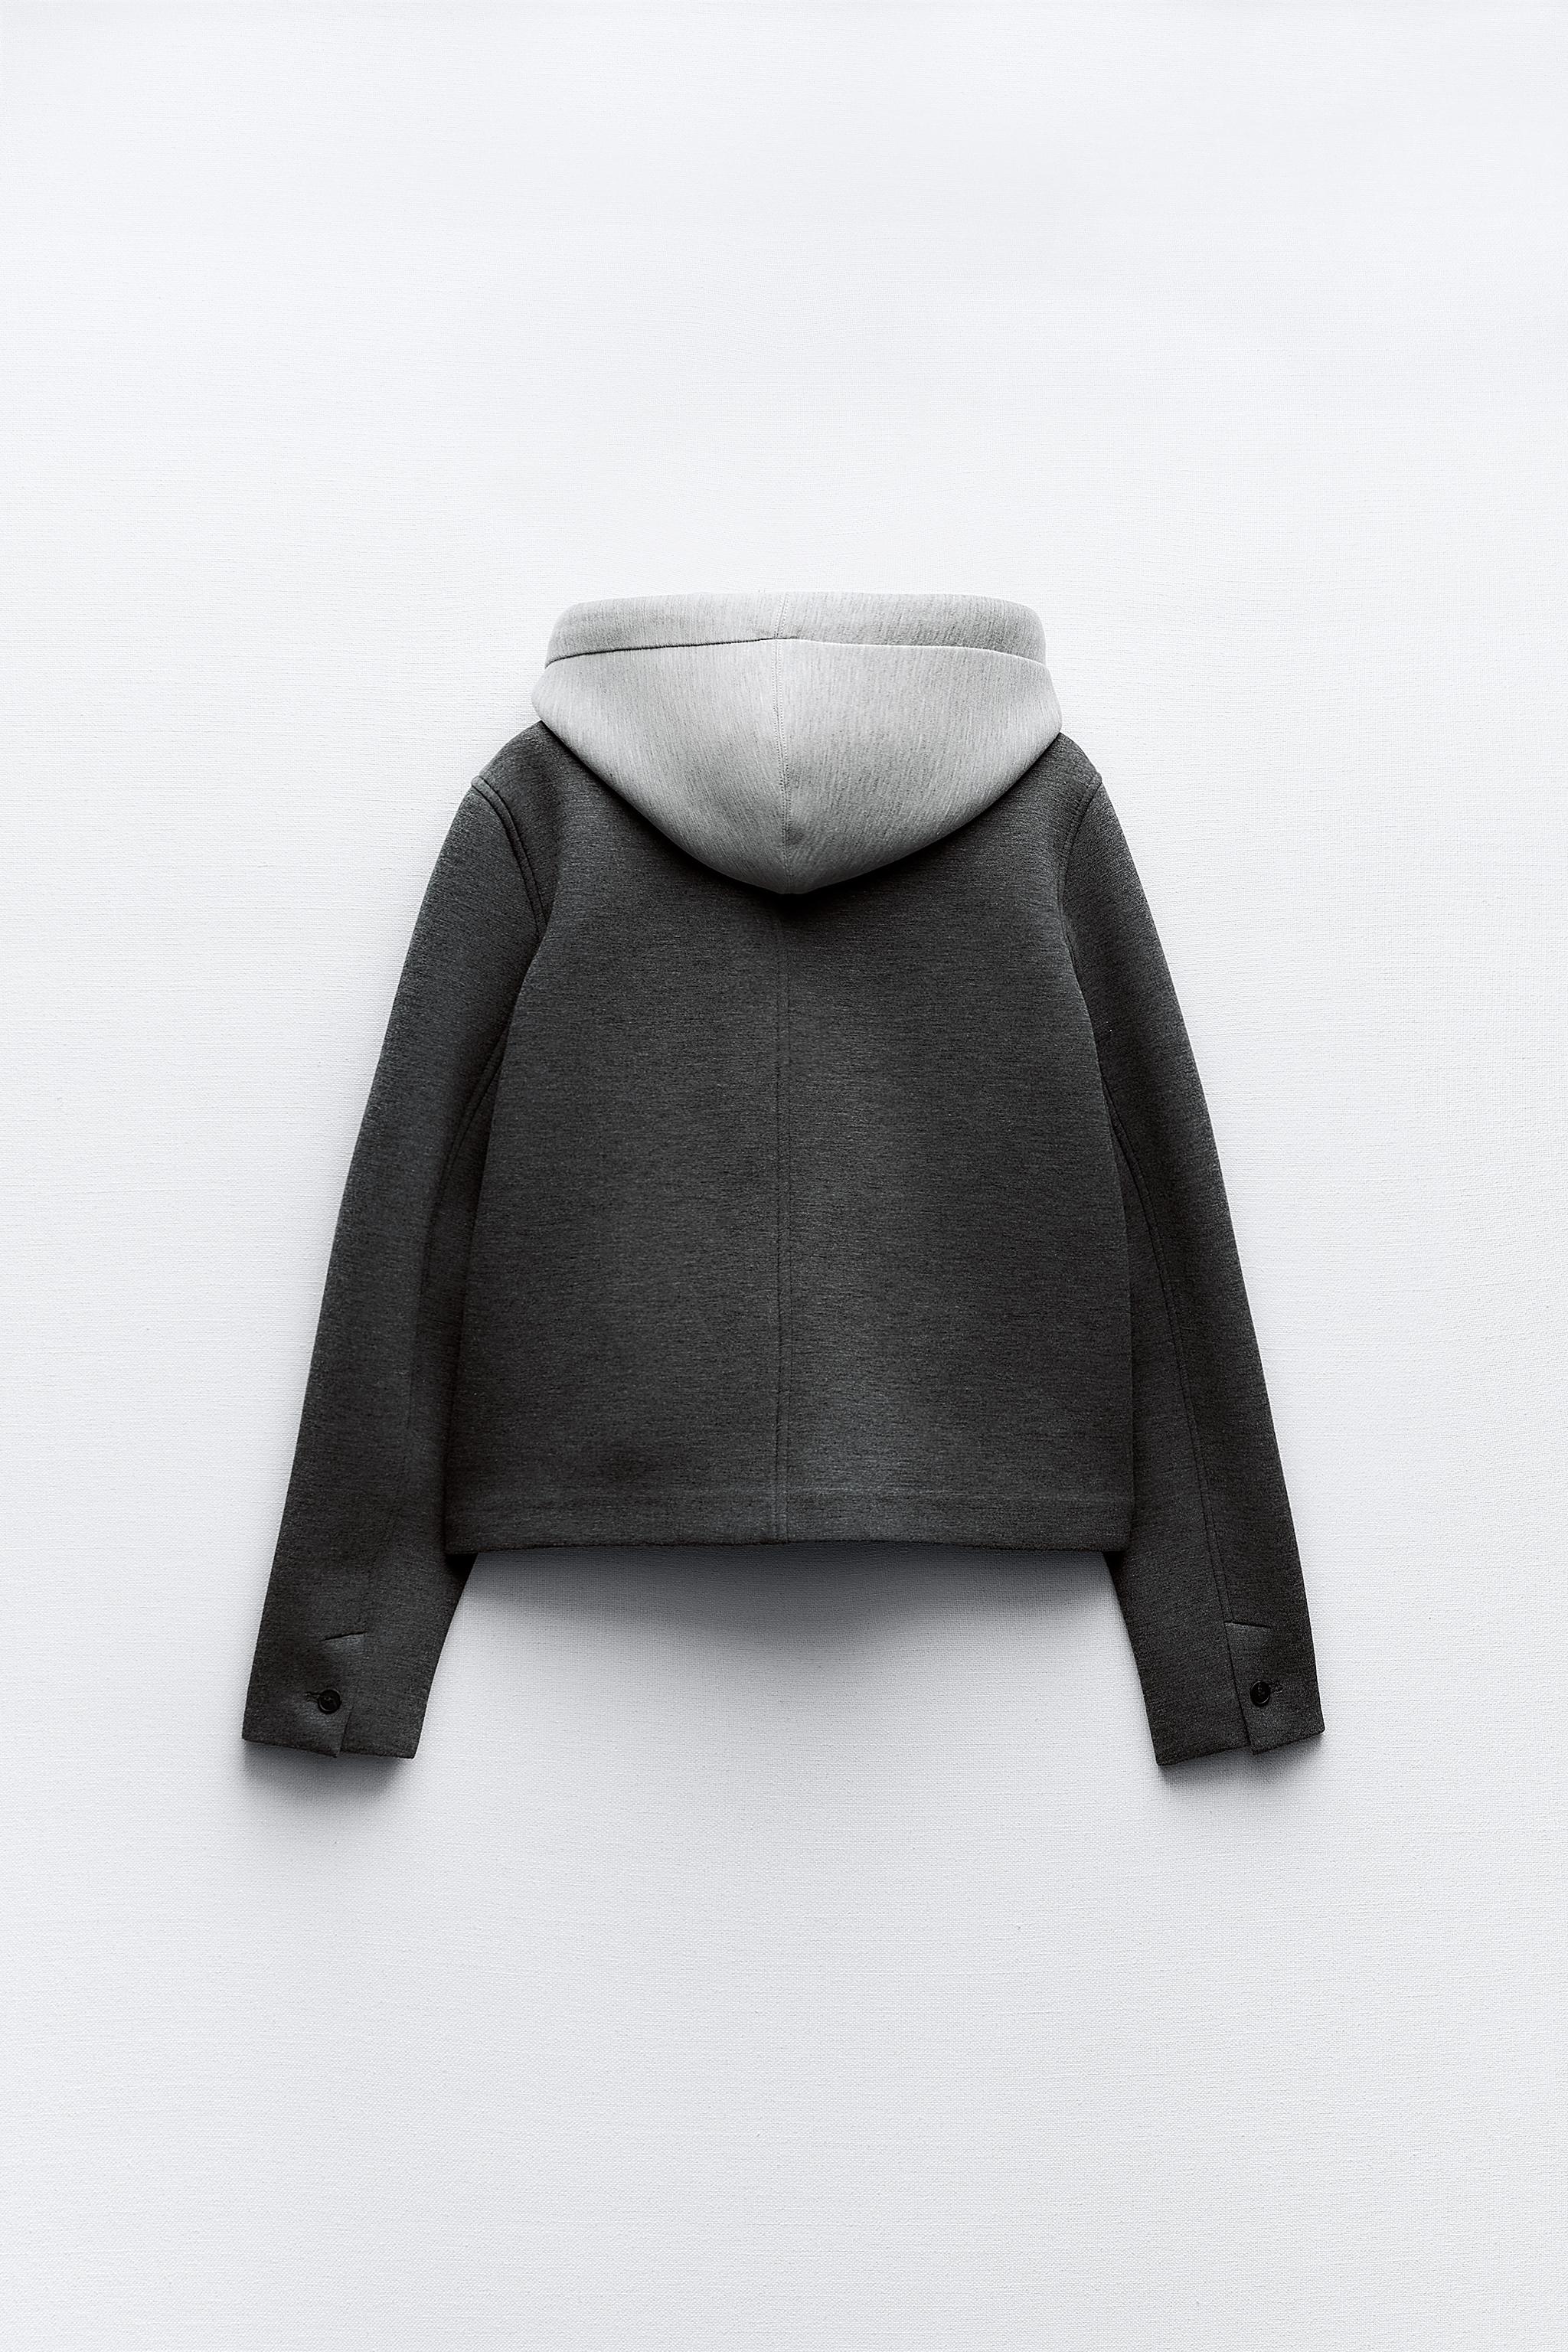 Escada - Gray Wool Blend Wide-Collar Zip-Up Jacket Sz 8 – Current